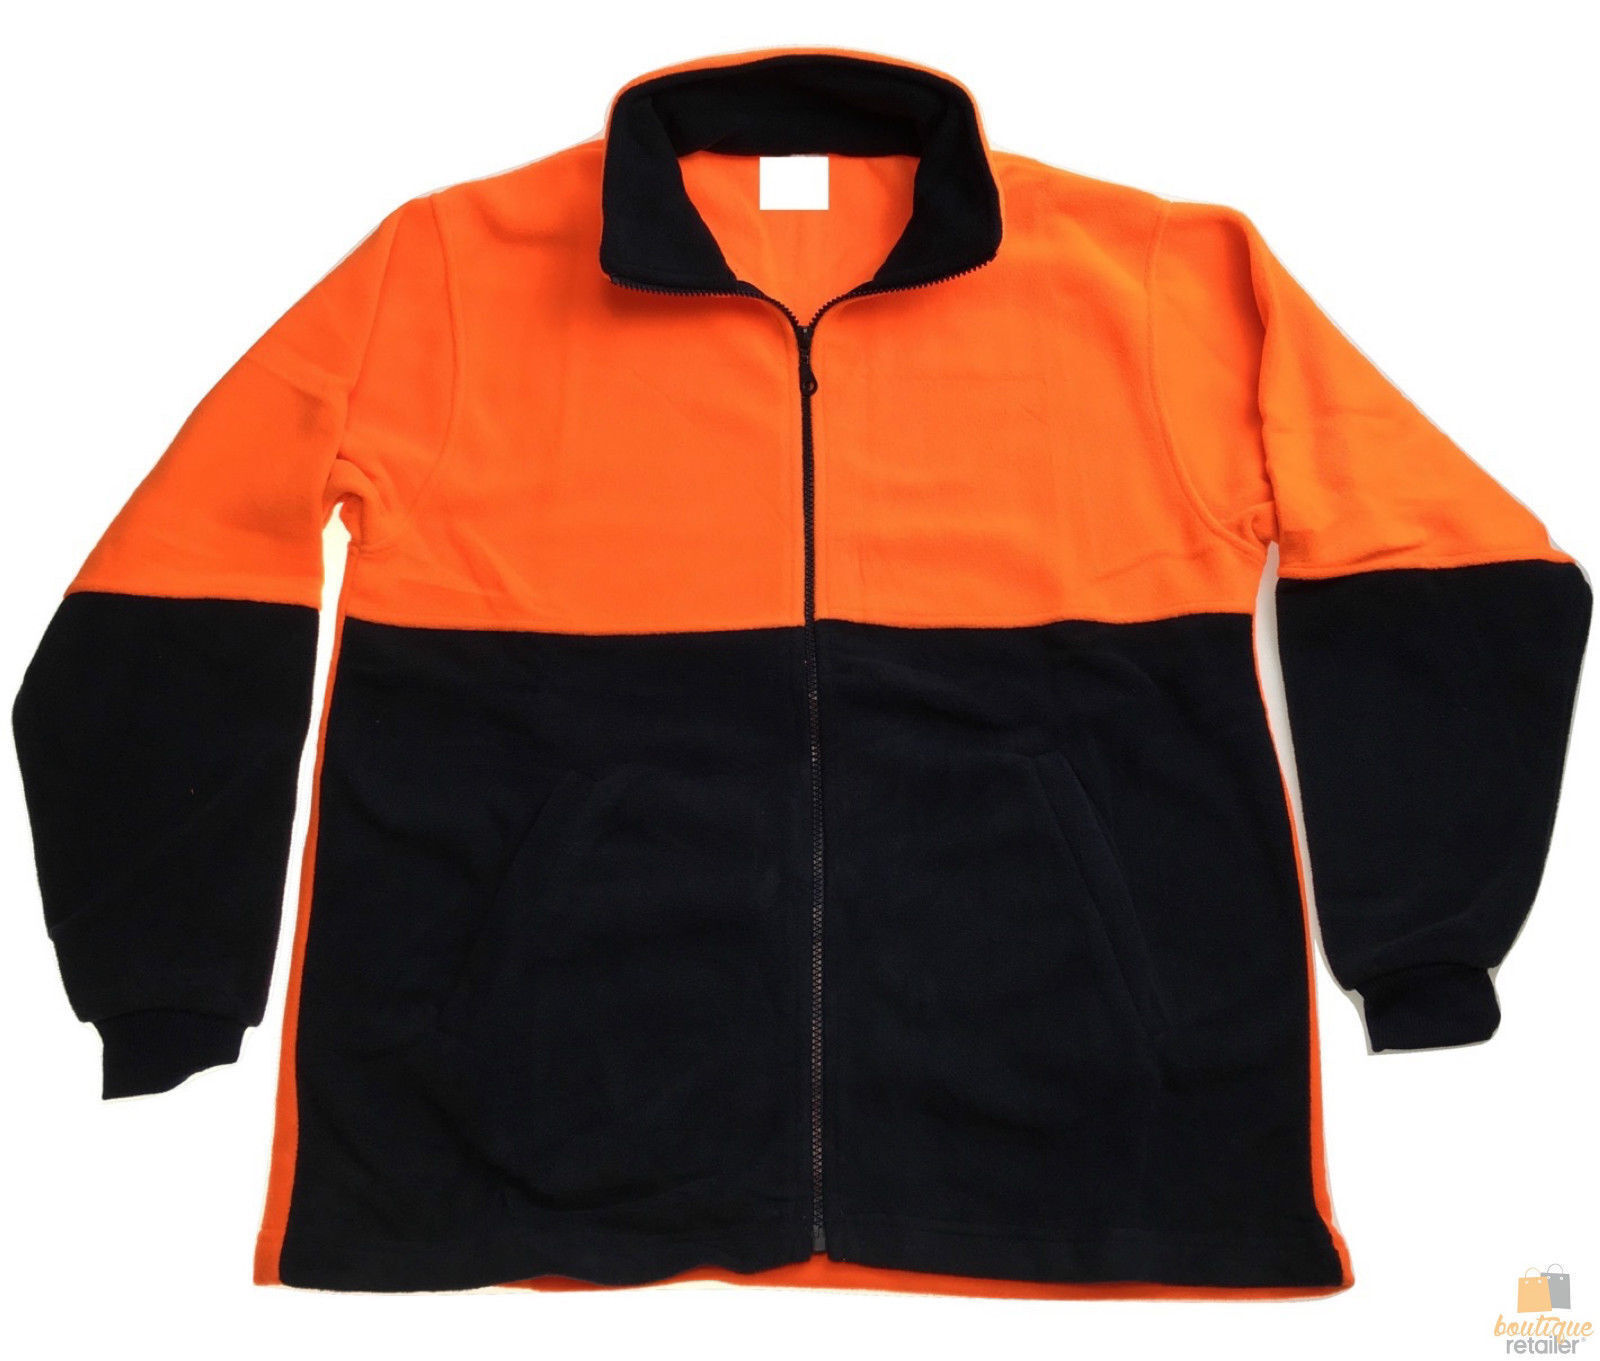 HI VIS POLAR FLEECE Jumper Full Zip Safety Workwear Fleecy Jacket Unisex - Orange - 3XL